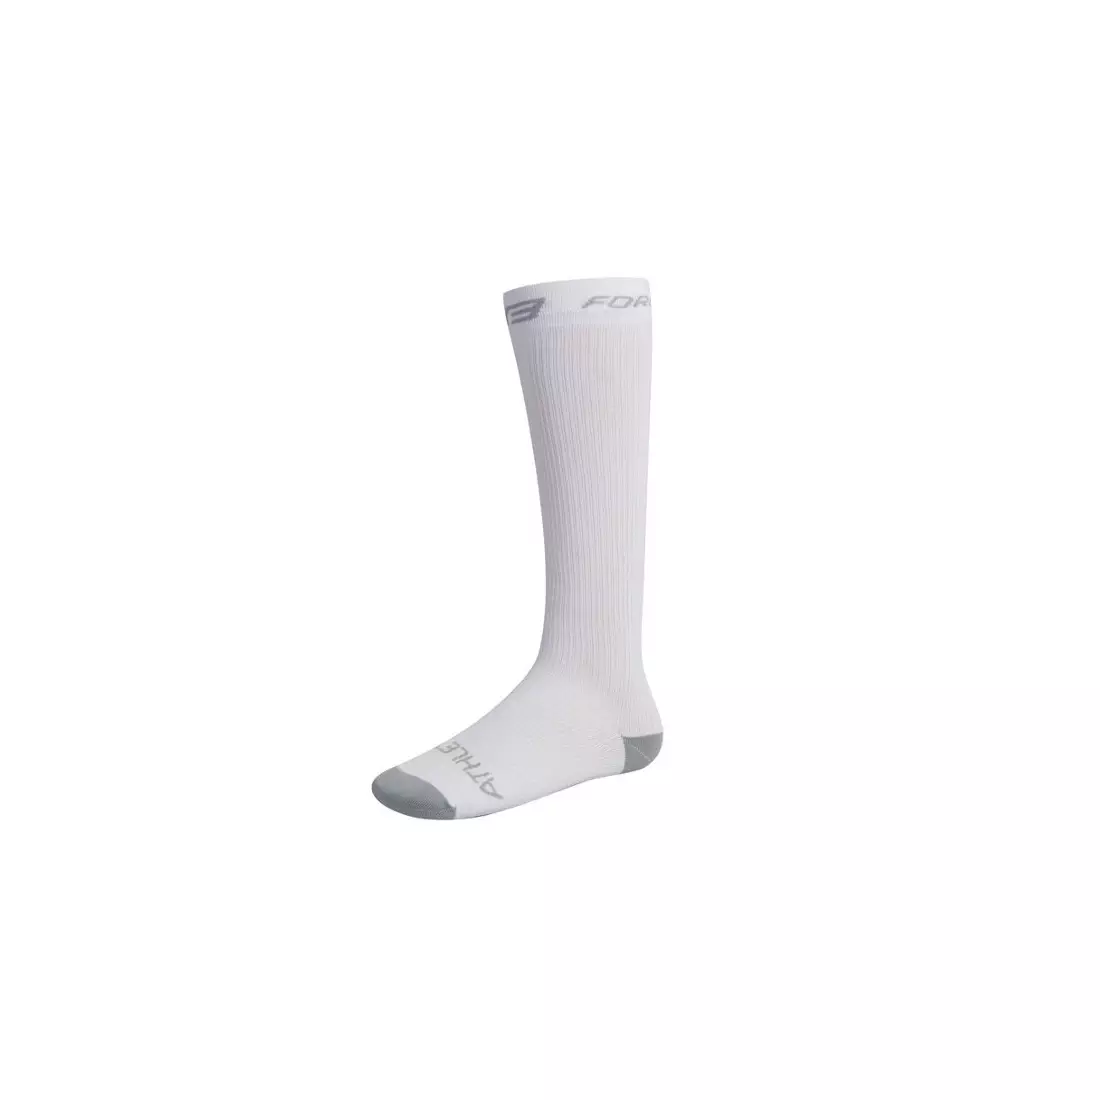 FORCE compression socks 90103, color: White